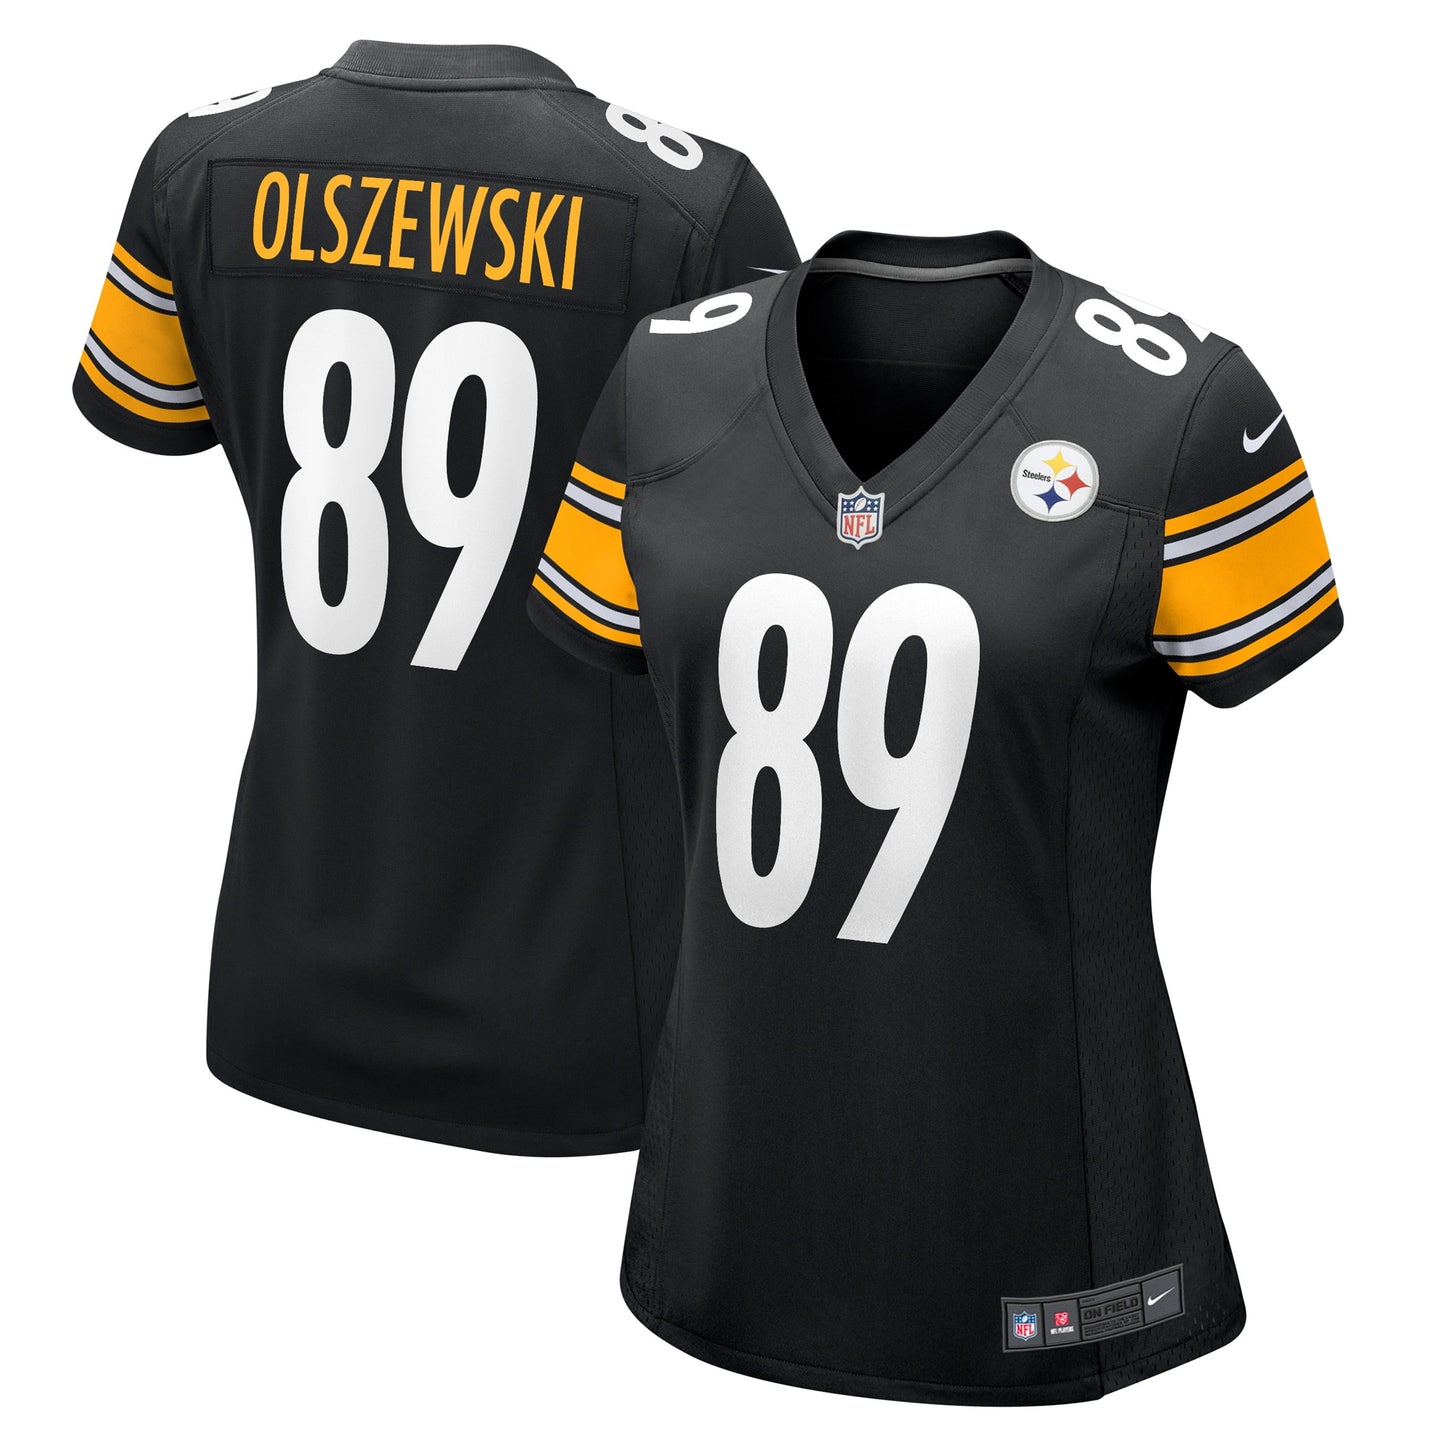 Gunner Olszewski Pittsburgh Steelers Nike Women's Game Player Jersey - Black